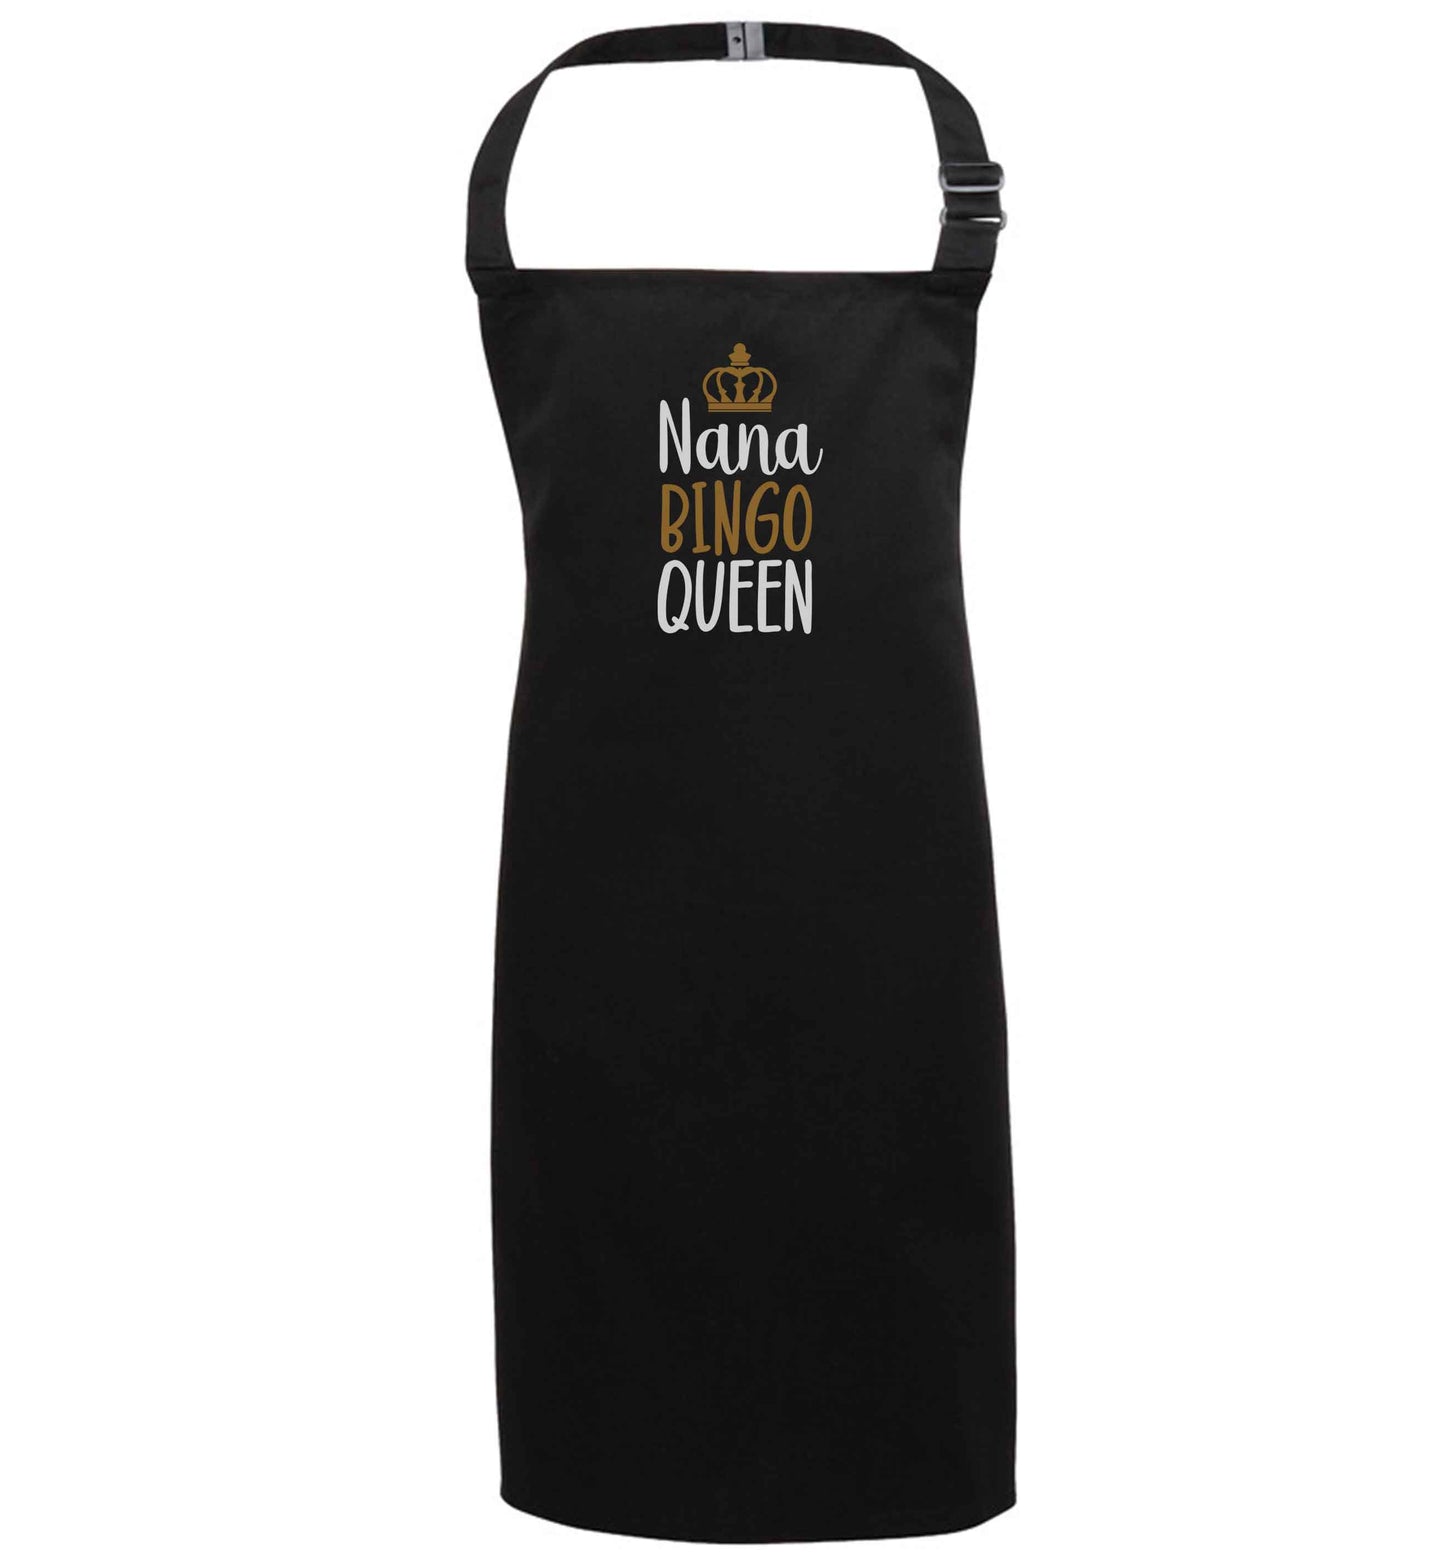 Personalised bingo queen black apron 7-10 years